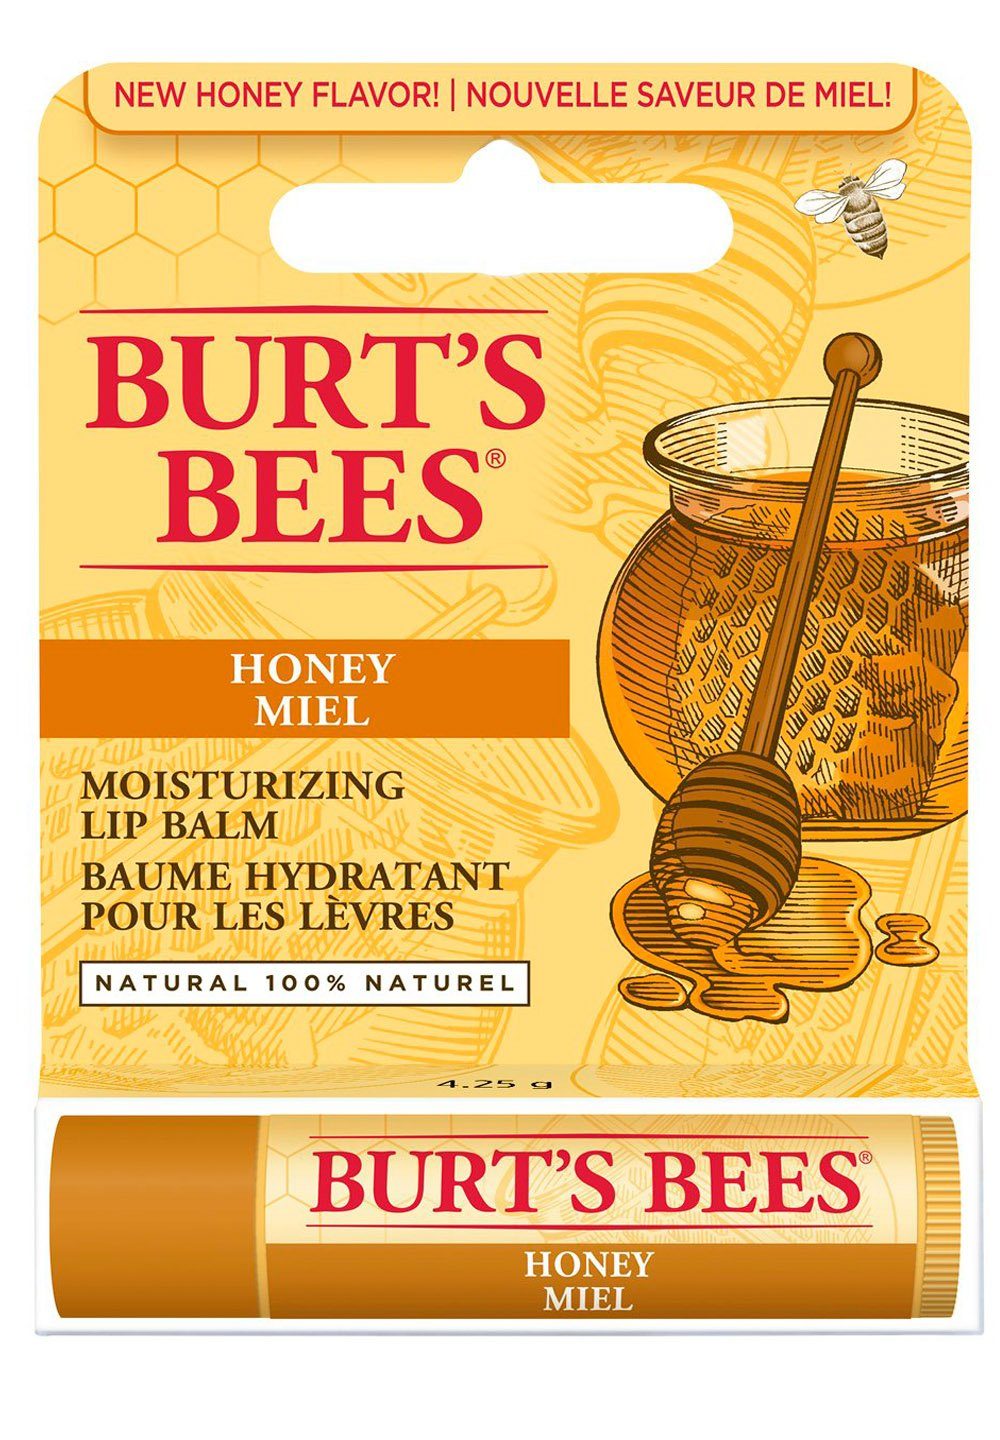 [Super niedriger Preis erzielt] BURT'S BEES Lippenbalsam Honig, Blister g Balm 4,25 Lip